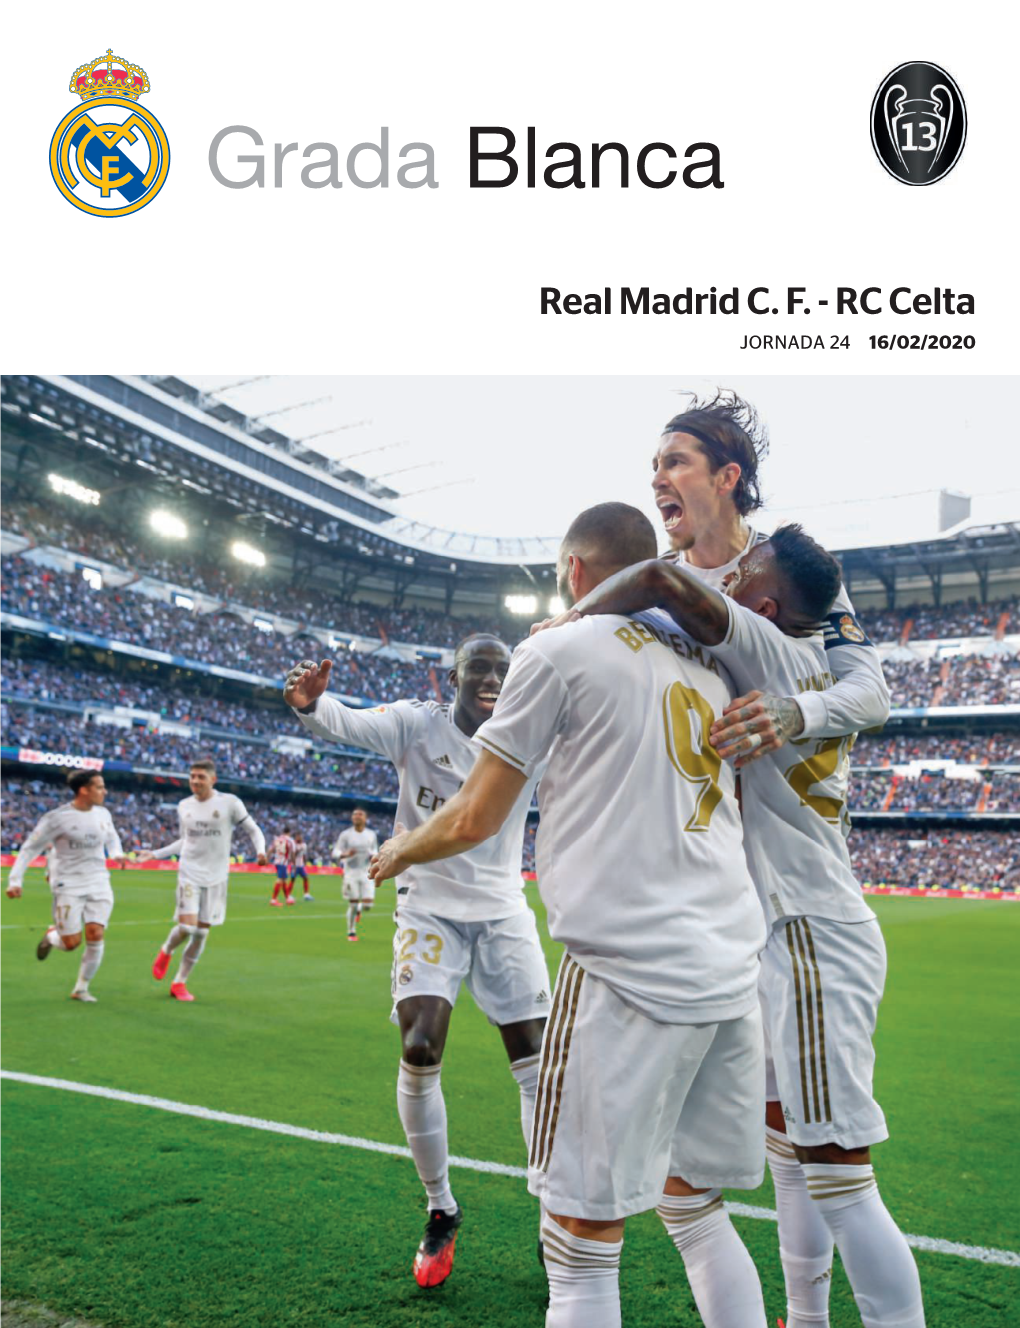 Real Madrid C. F. - RC Celta JORNADA 24 16/02/2020